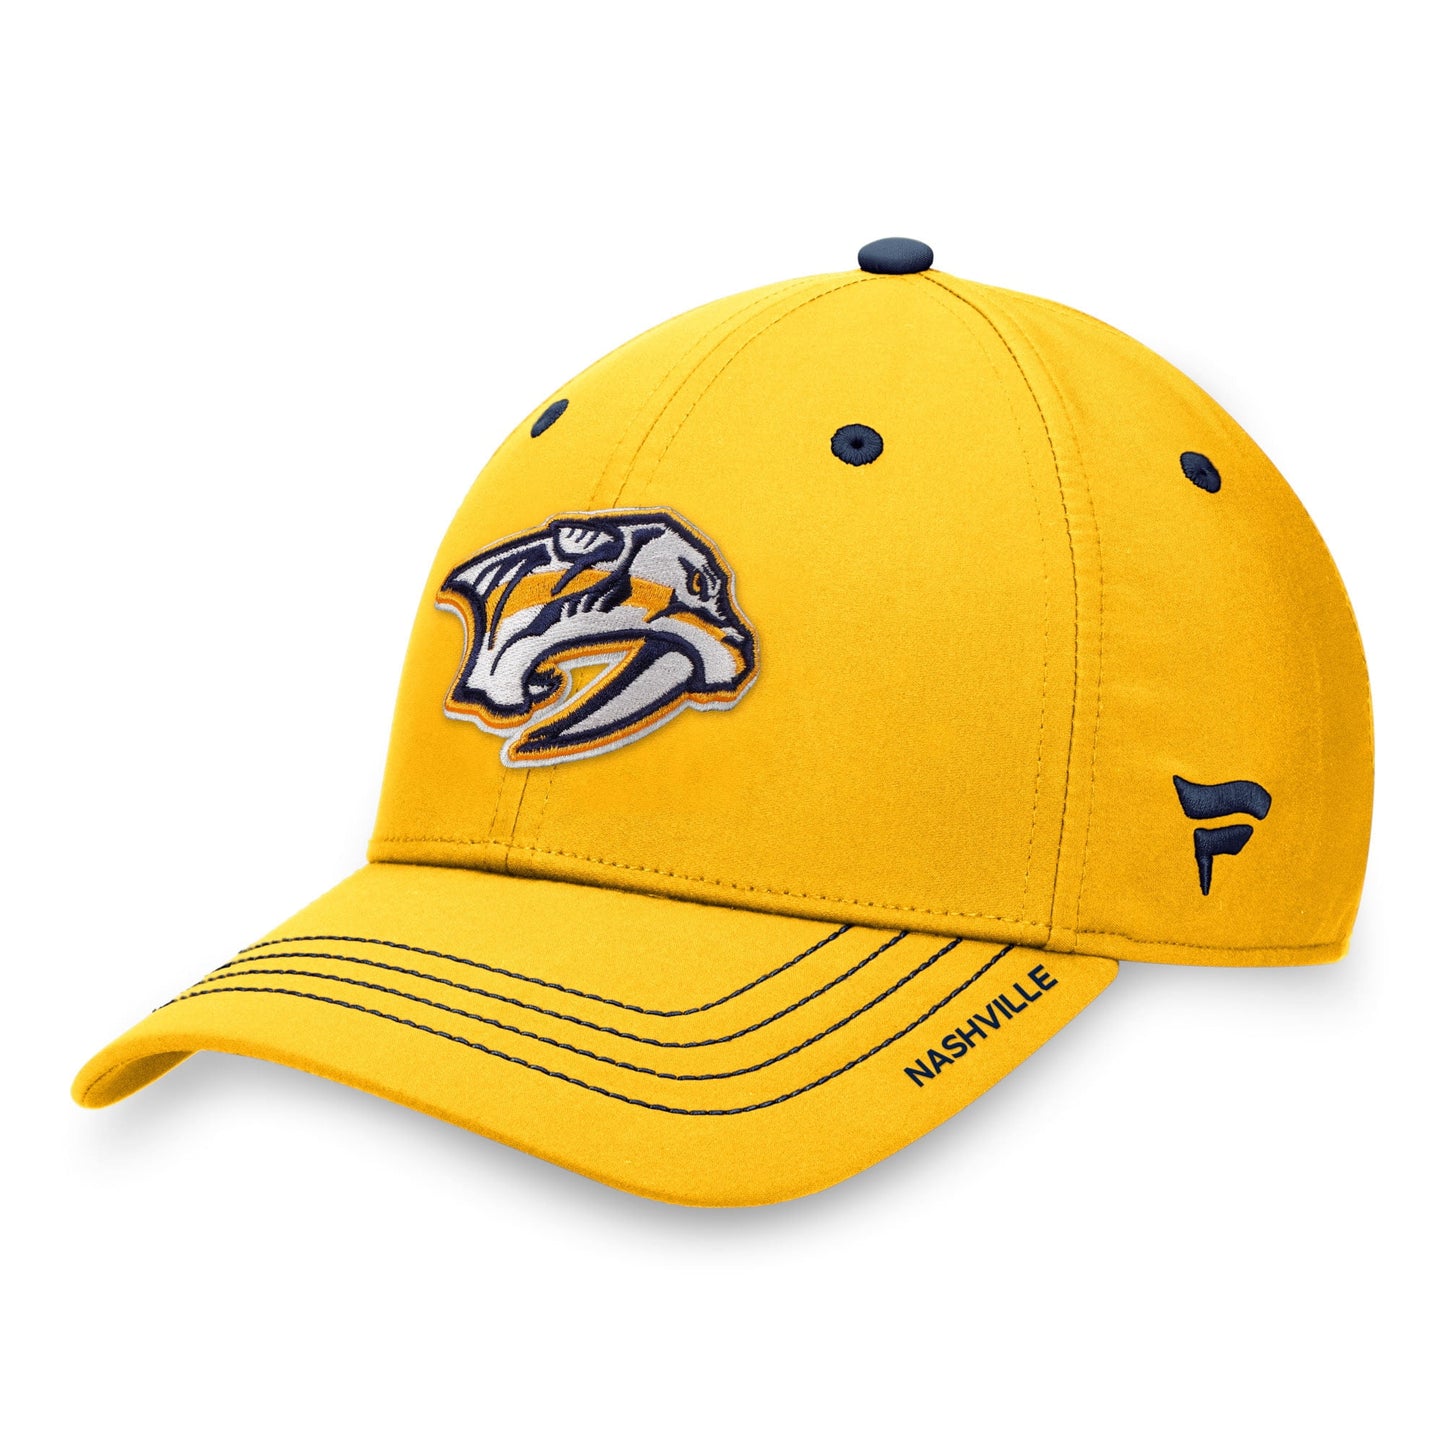 Men's Fanatics Branded Gold Nashville Predators Authentic Pro Rink Flex Hat